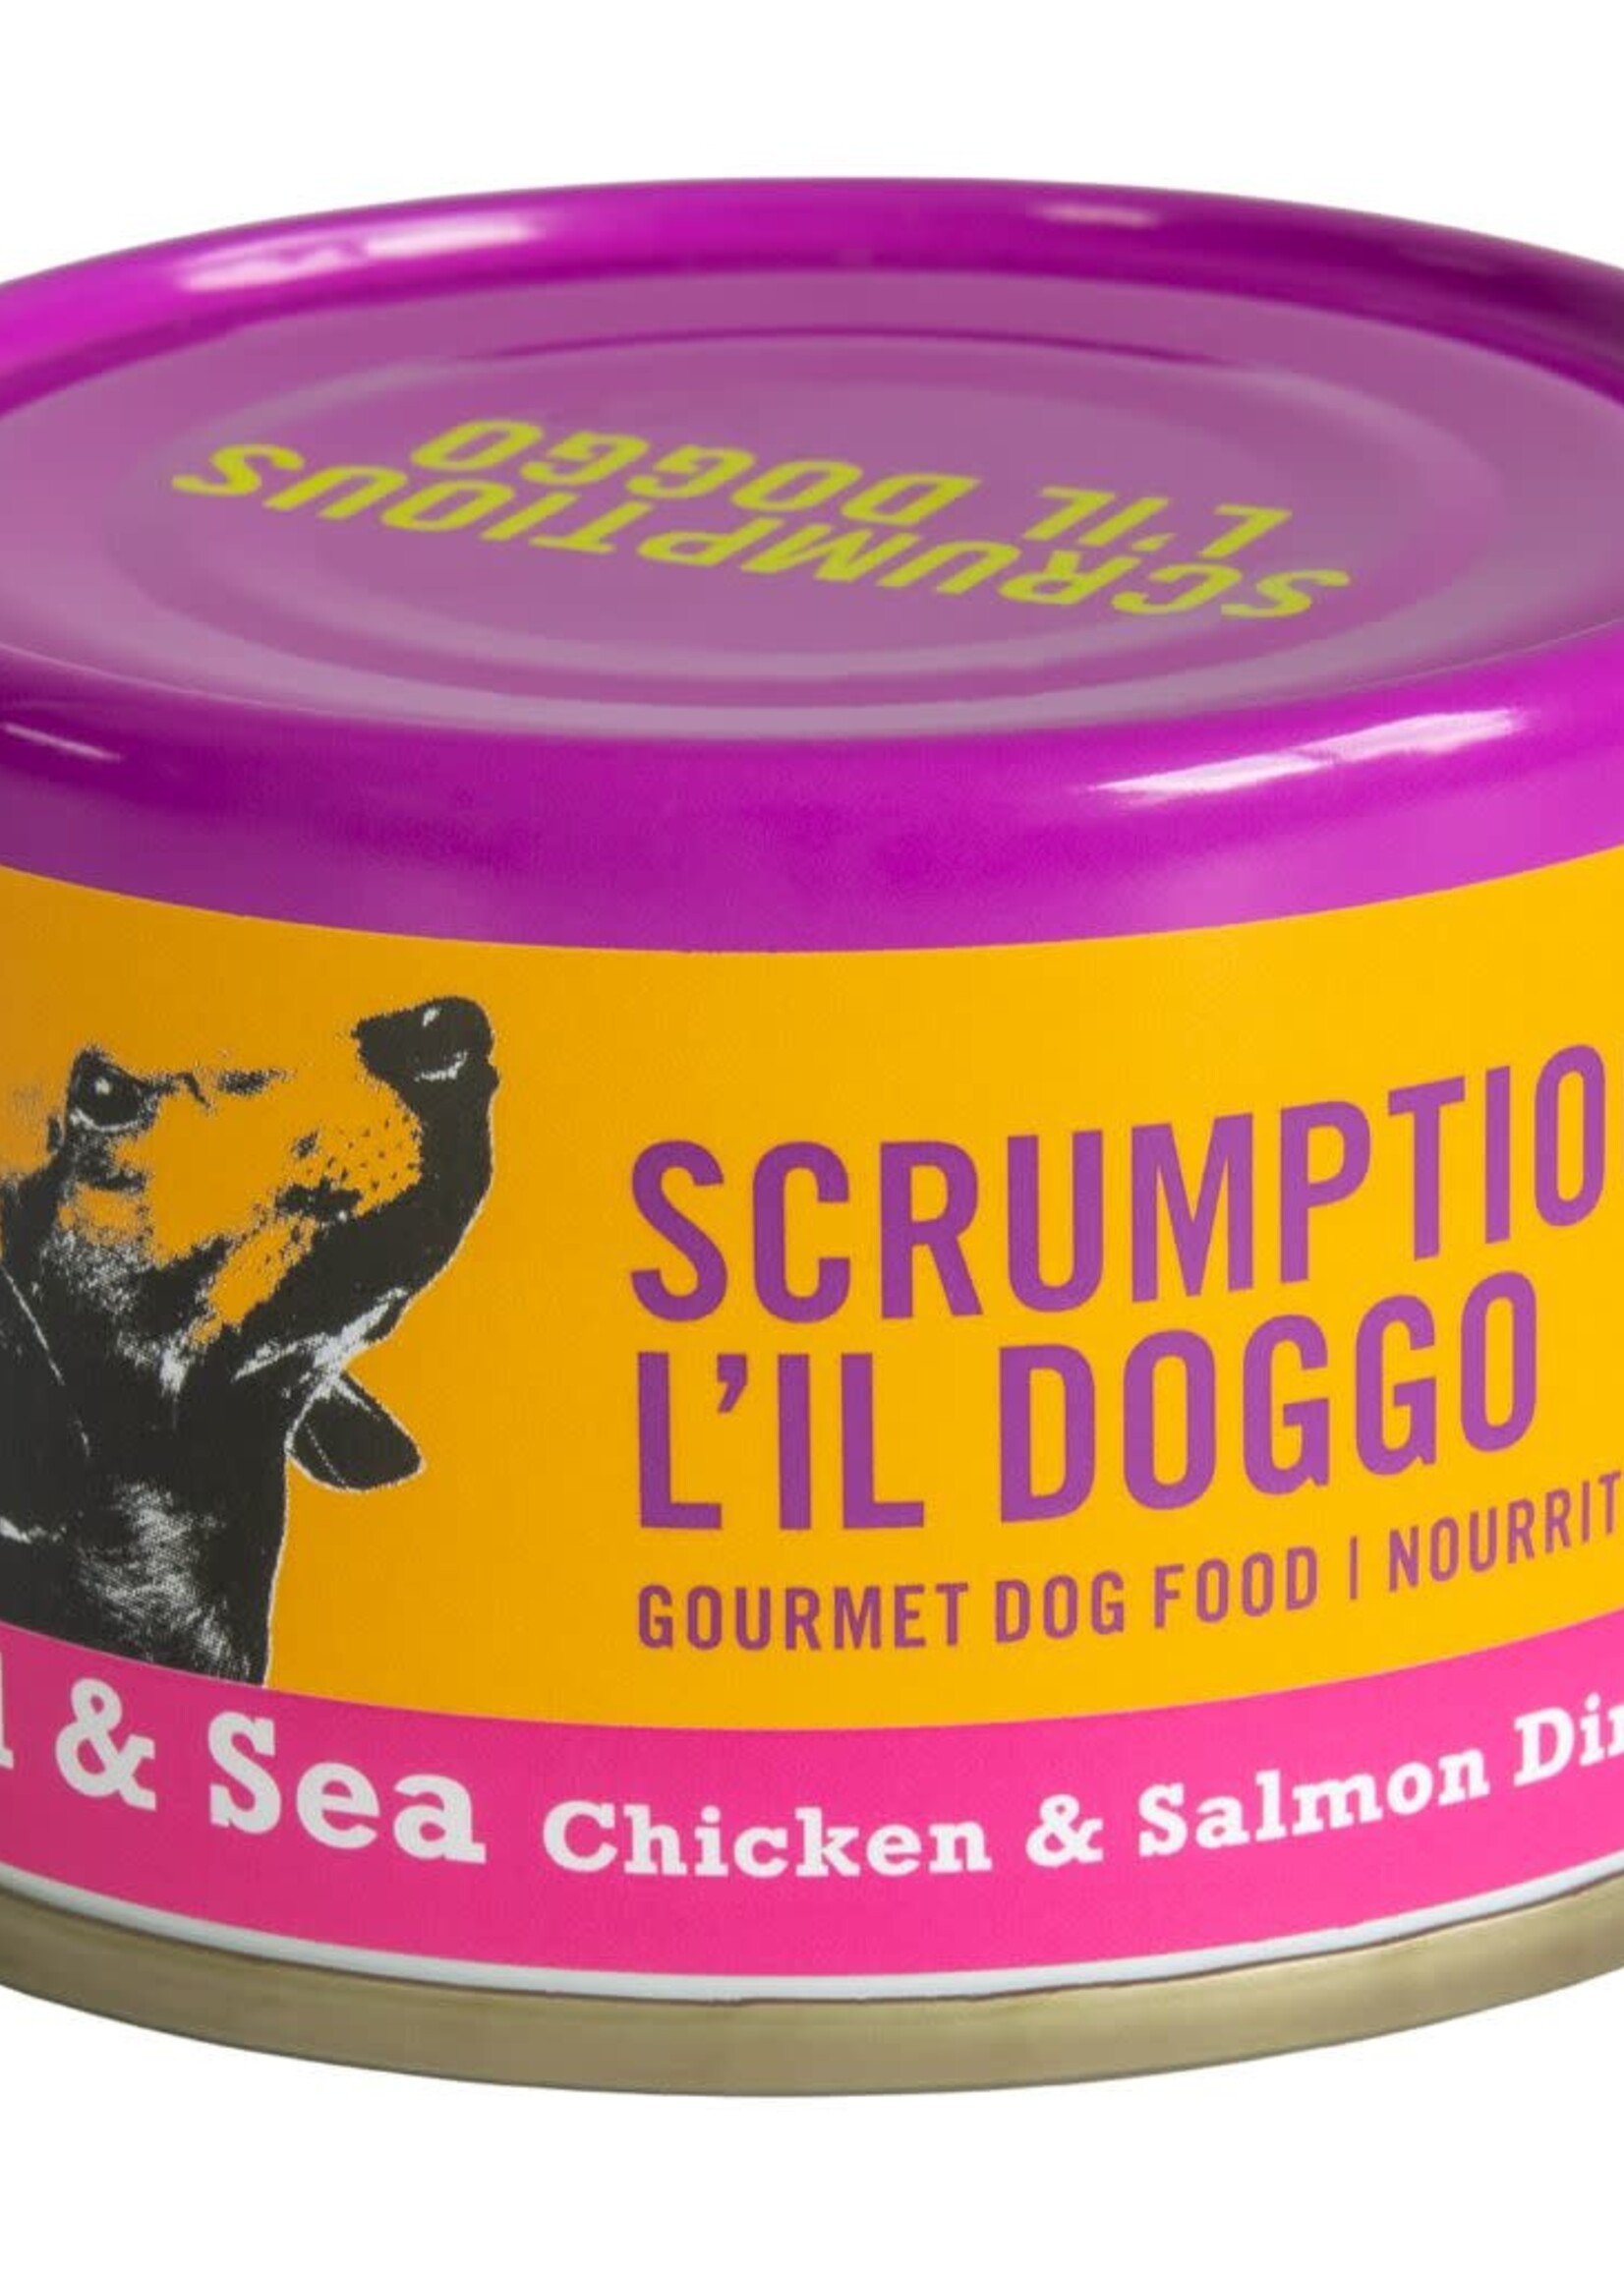 Scrumptious Scrumptious Doggo - Land & Sea Chicken & Salmon Dinner